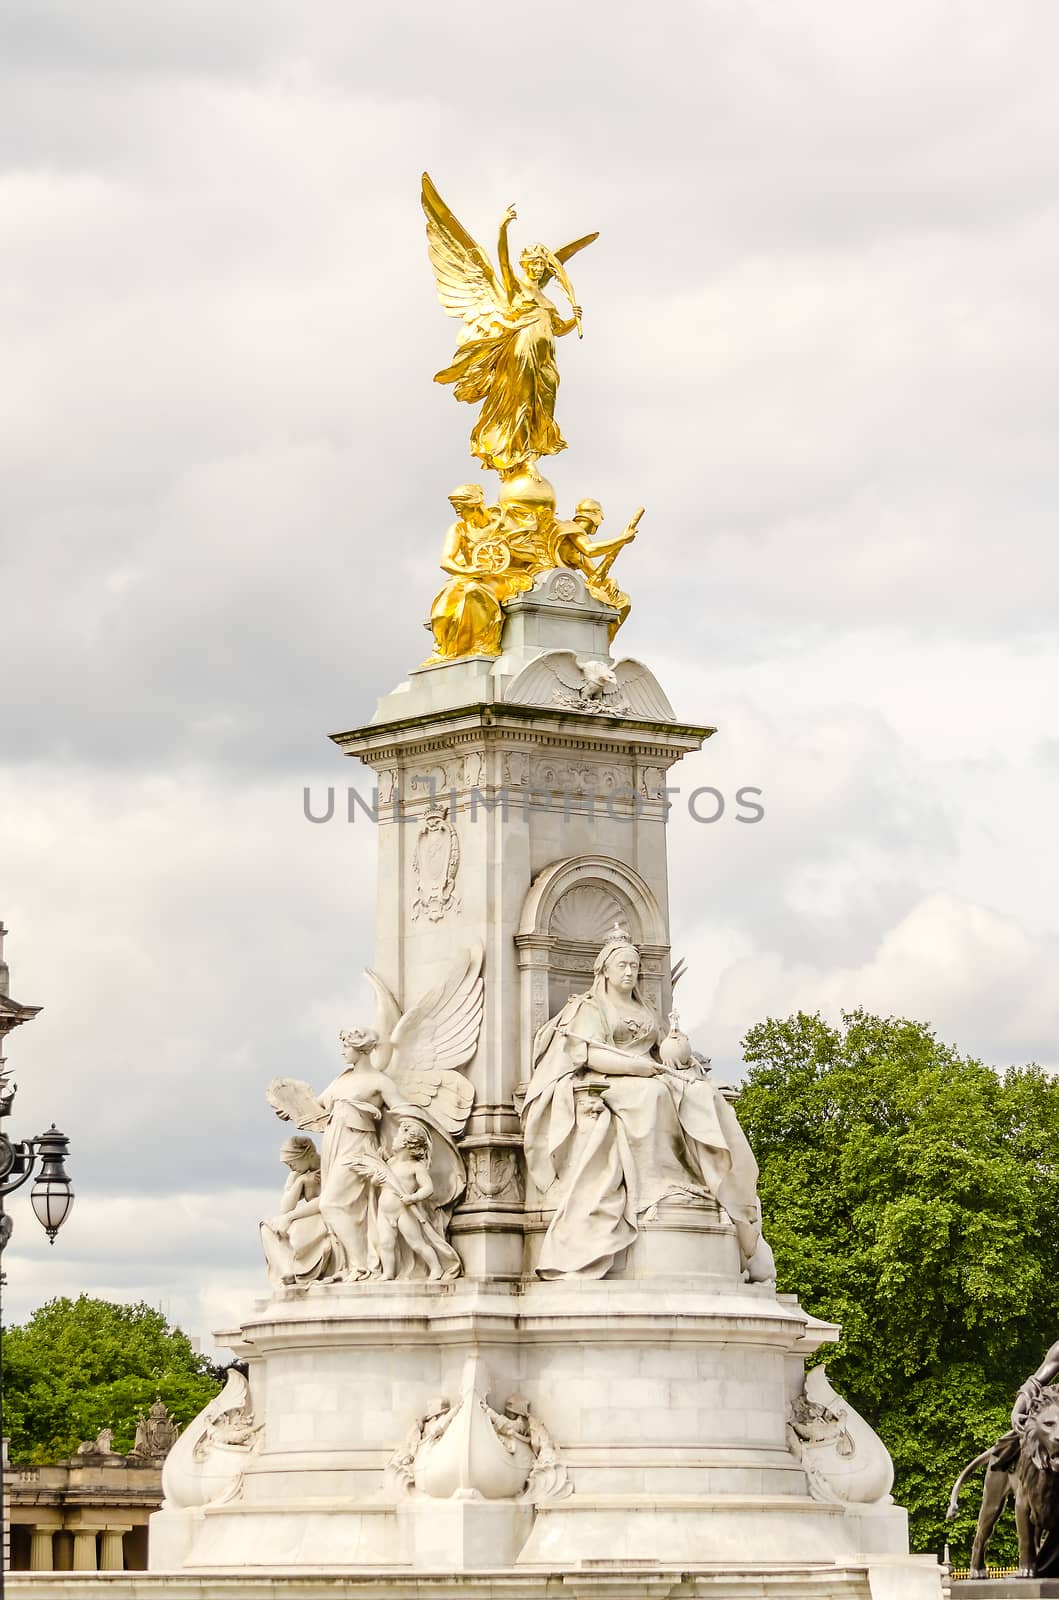 Victoria Memorial at Buckingham Palace, London by marcorubino